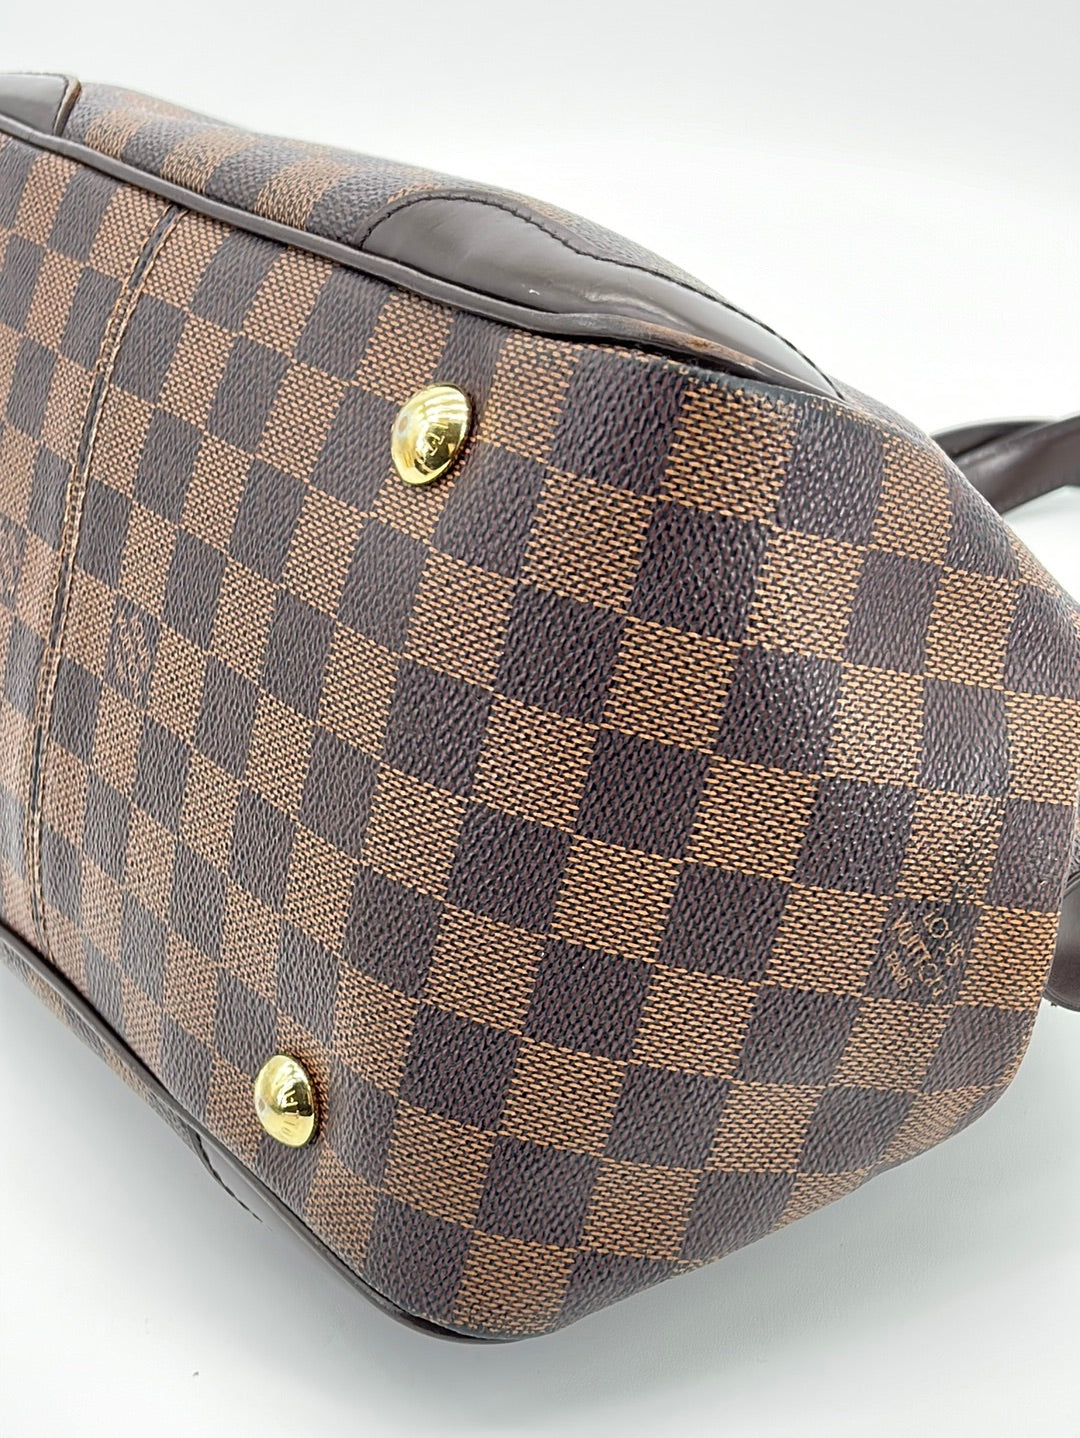 Buy Louis Vuitton Damier LOUIS VUITTON Verona PM Damier N41117 Handbag  Brown / 250754 [Used] from Japan - Buy authentic Plus exclusive items from  Japan